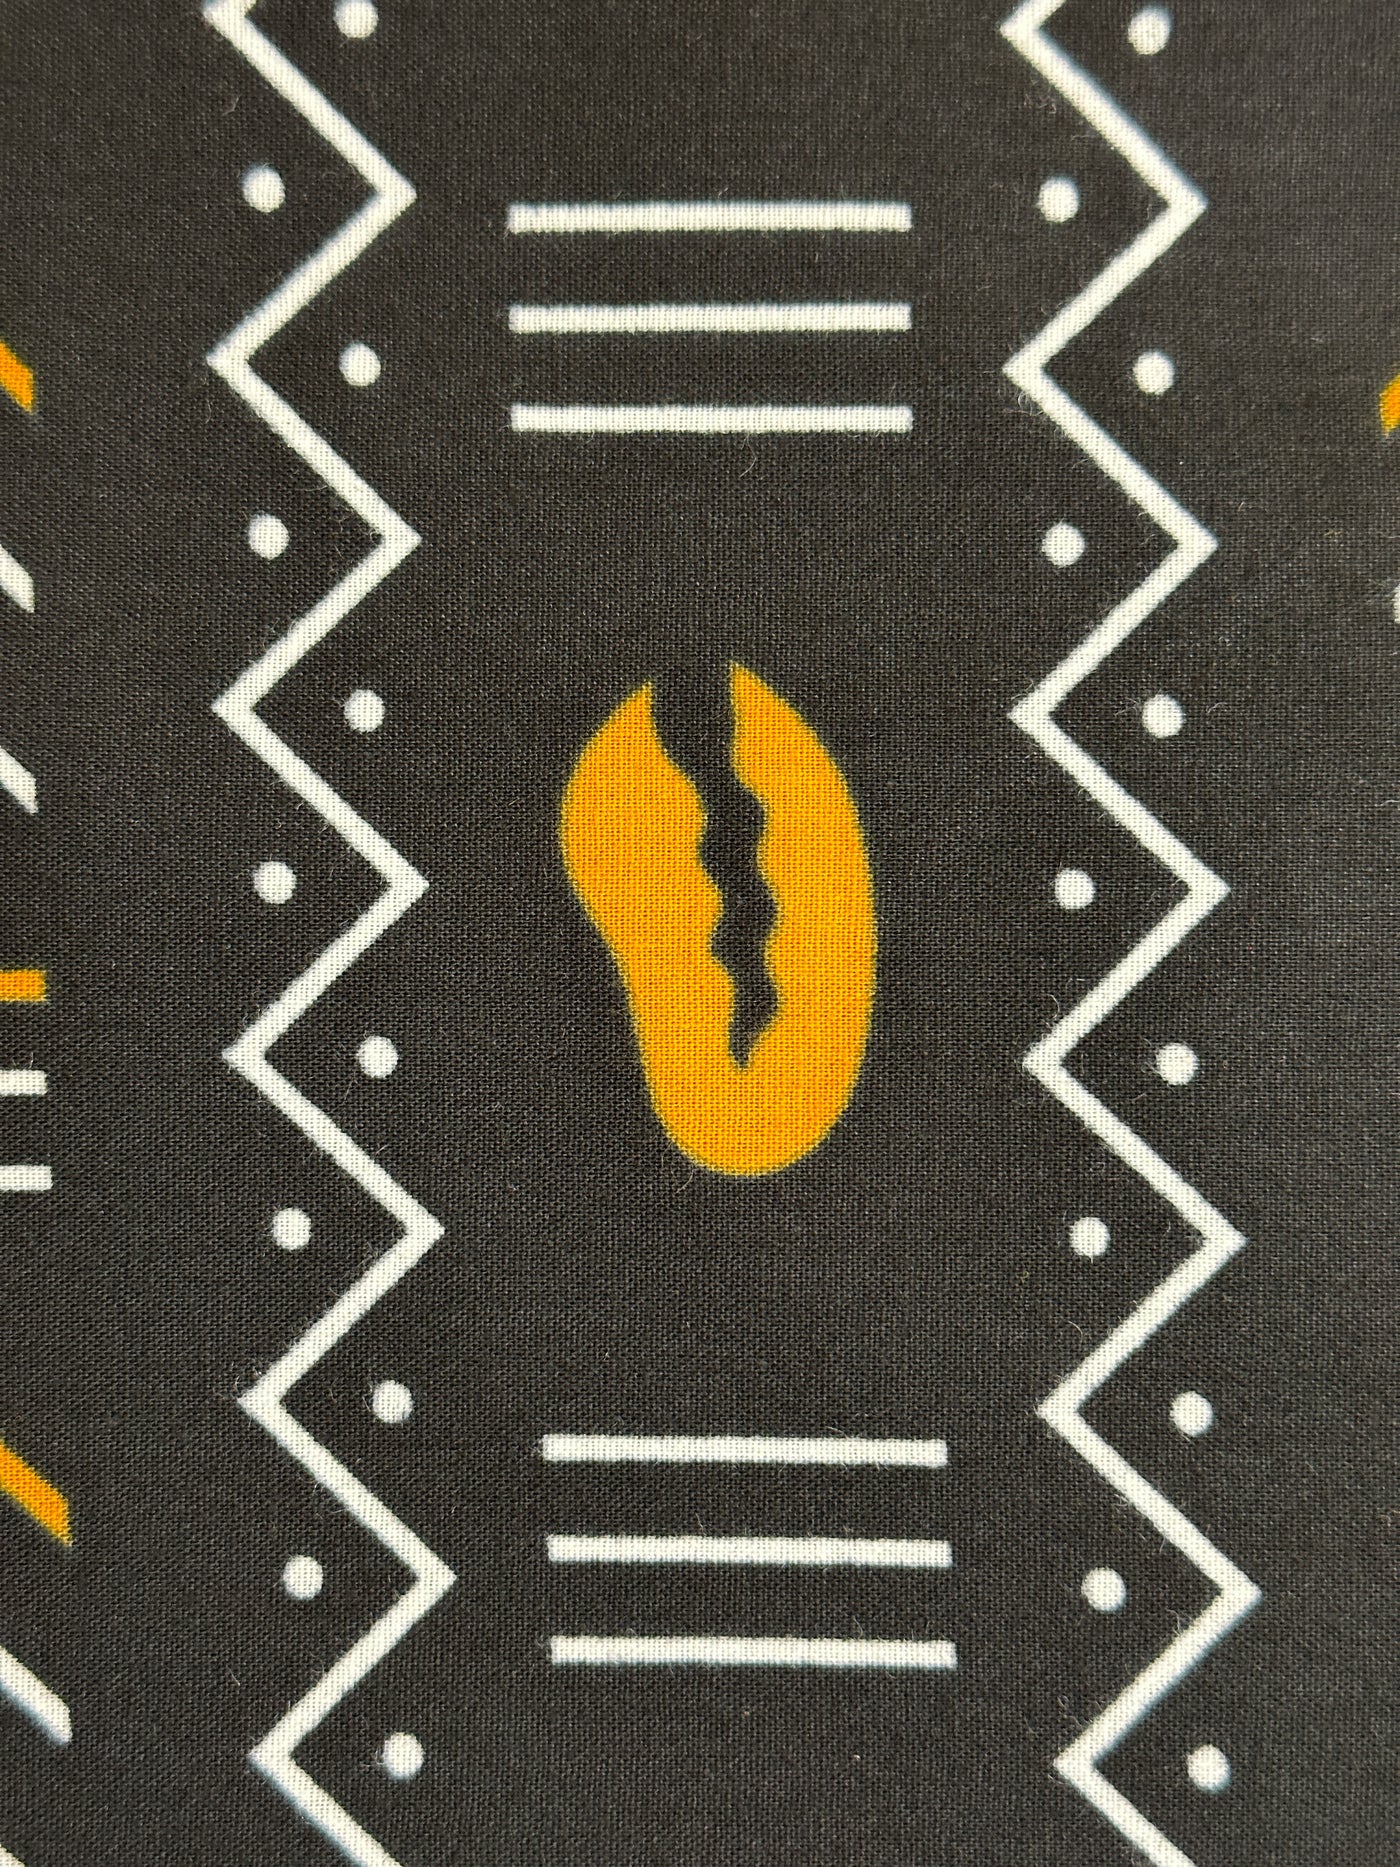 Tribal Print - 3188110